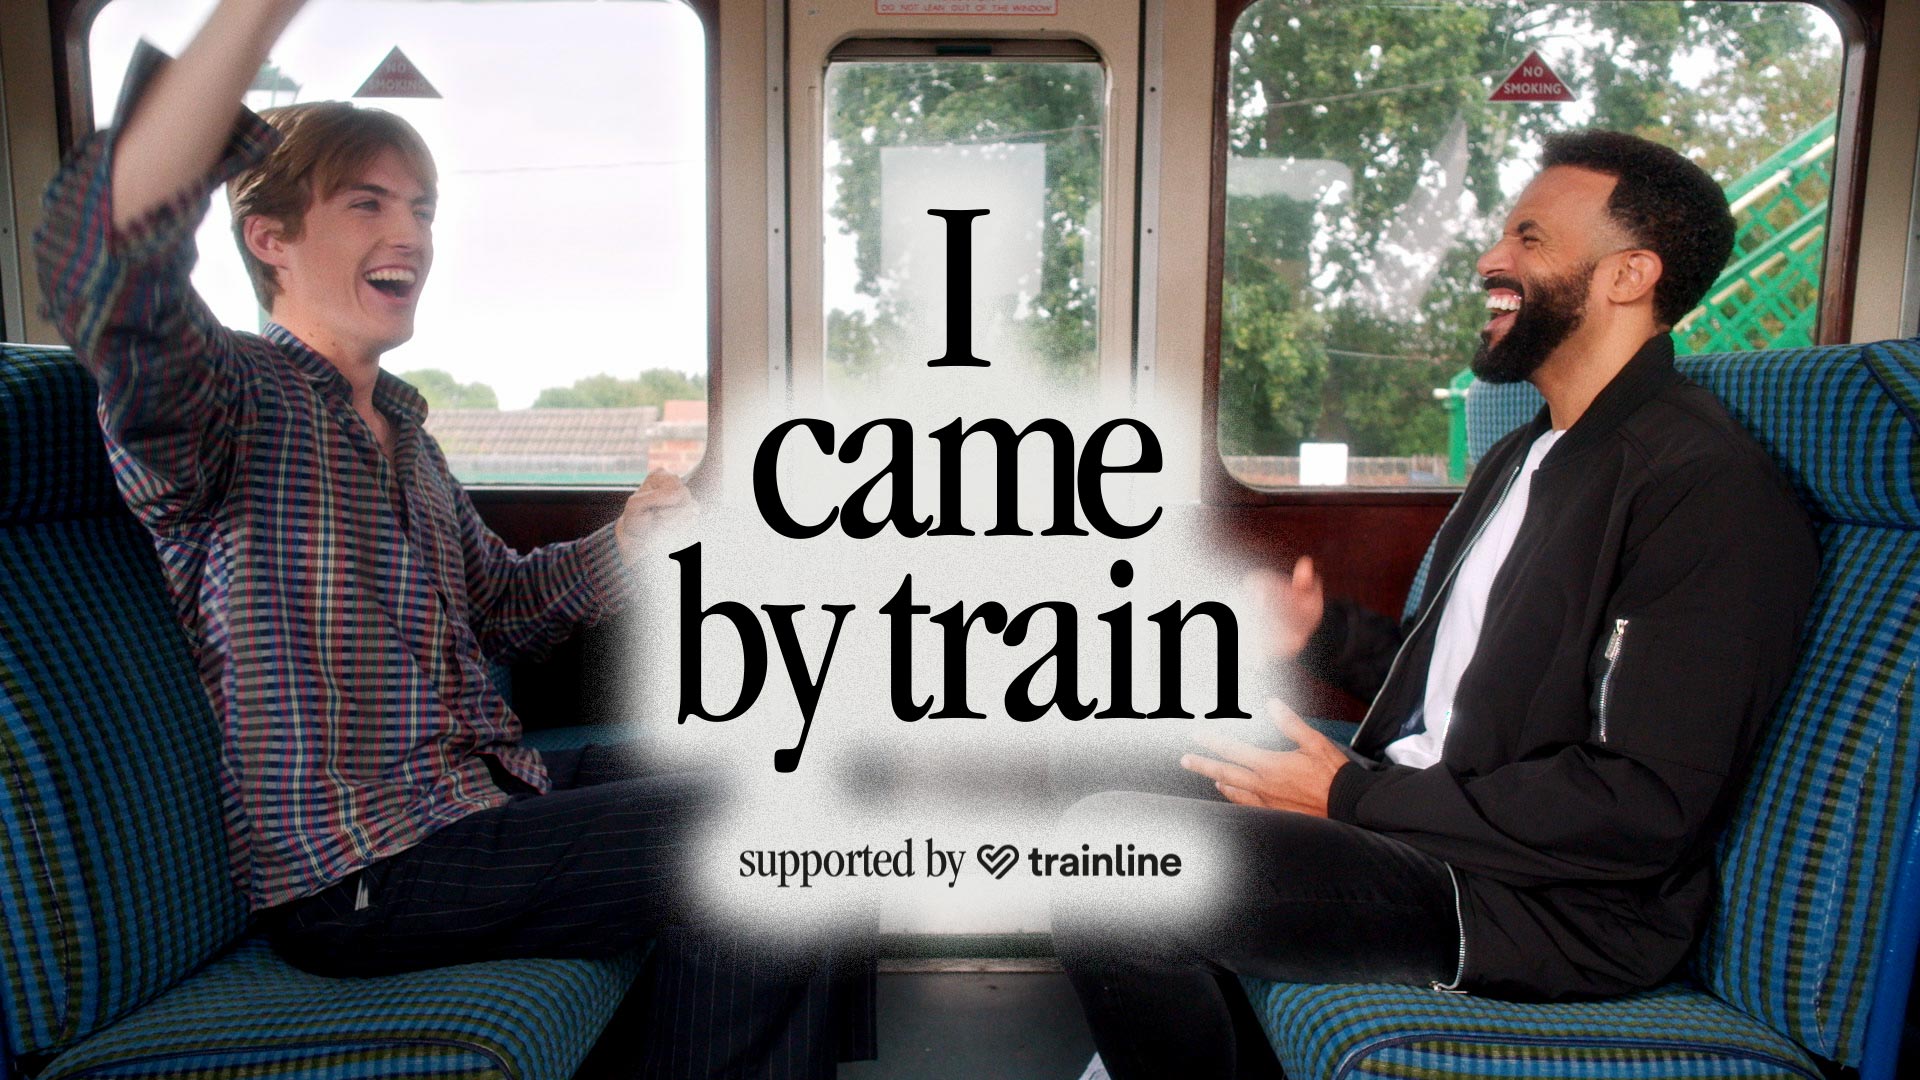 Trainline hero image - Francis Bourgeois and Craig David on a train